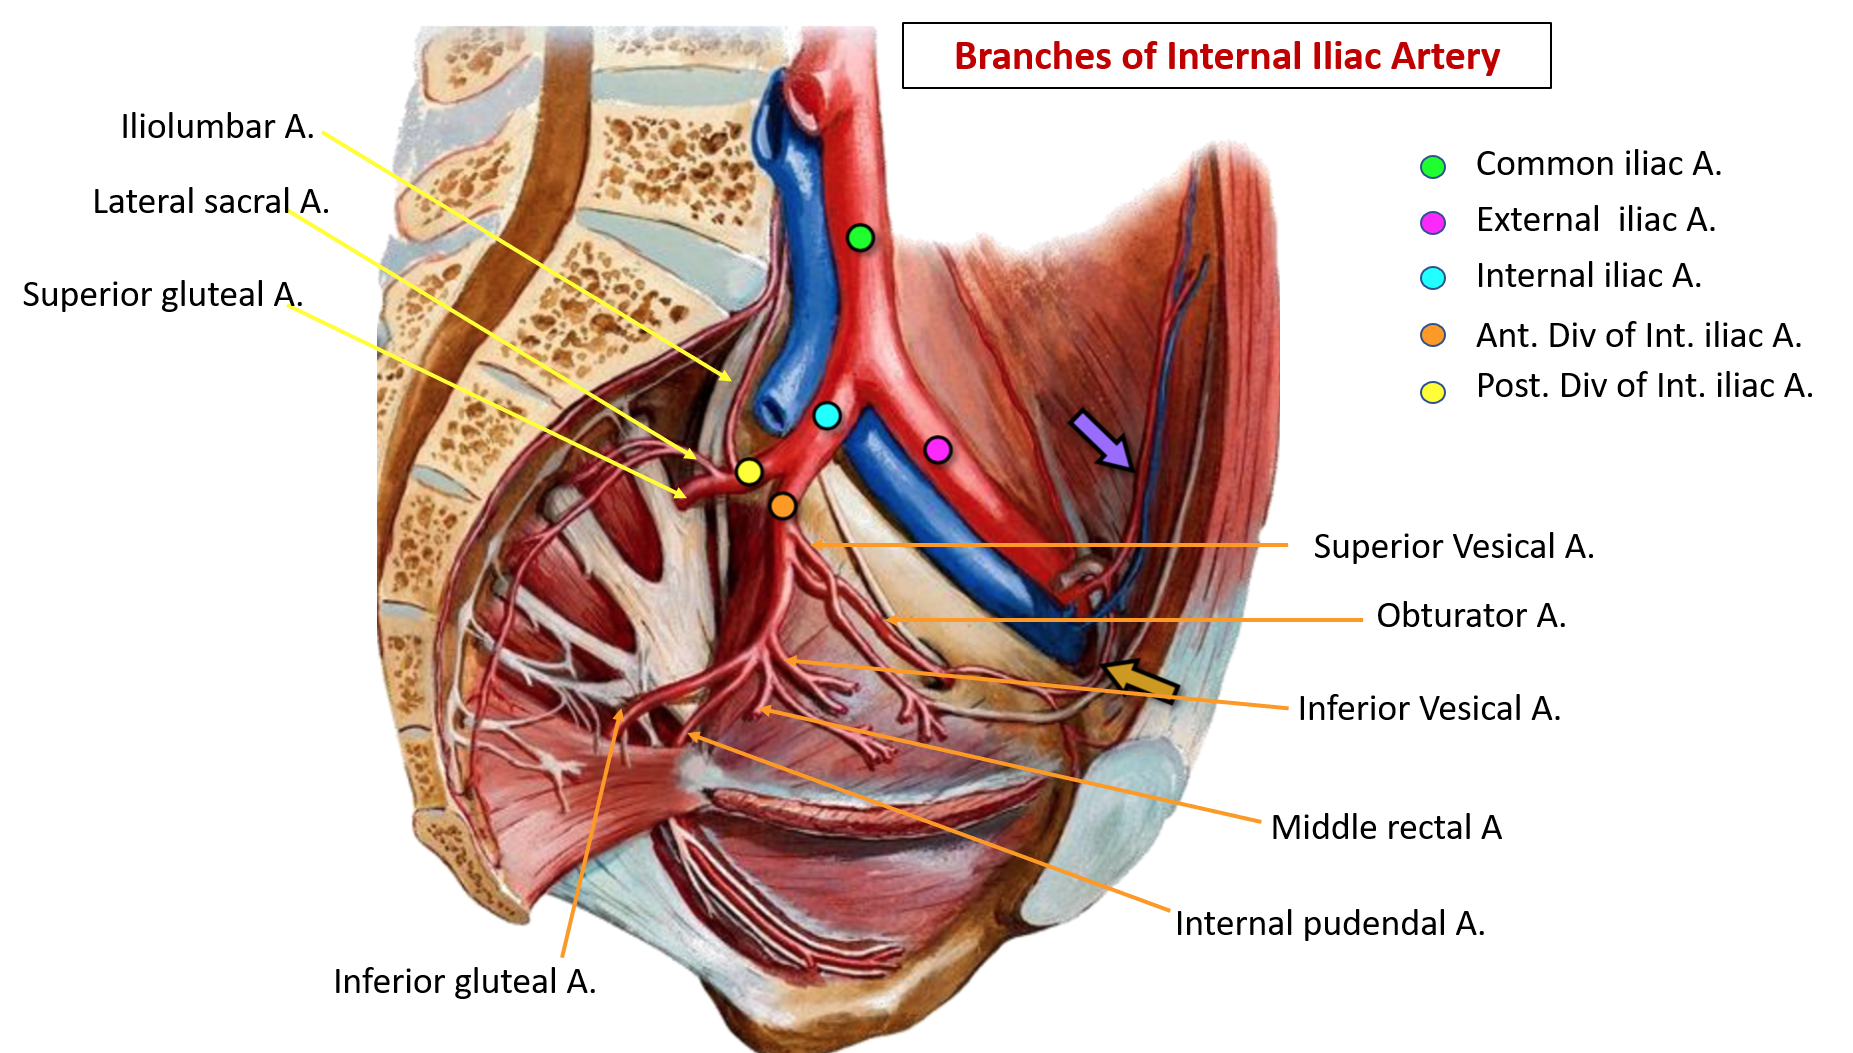 Branches of internal iliac artery